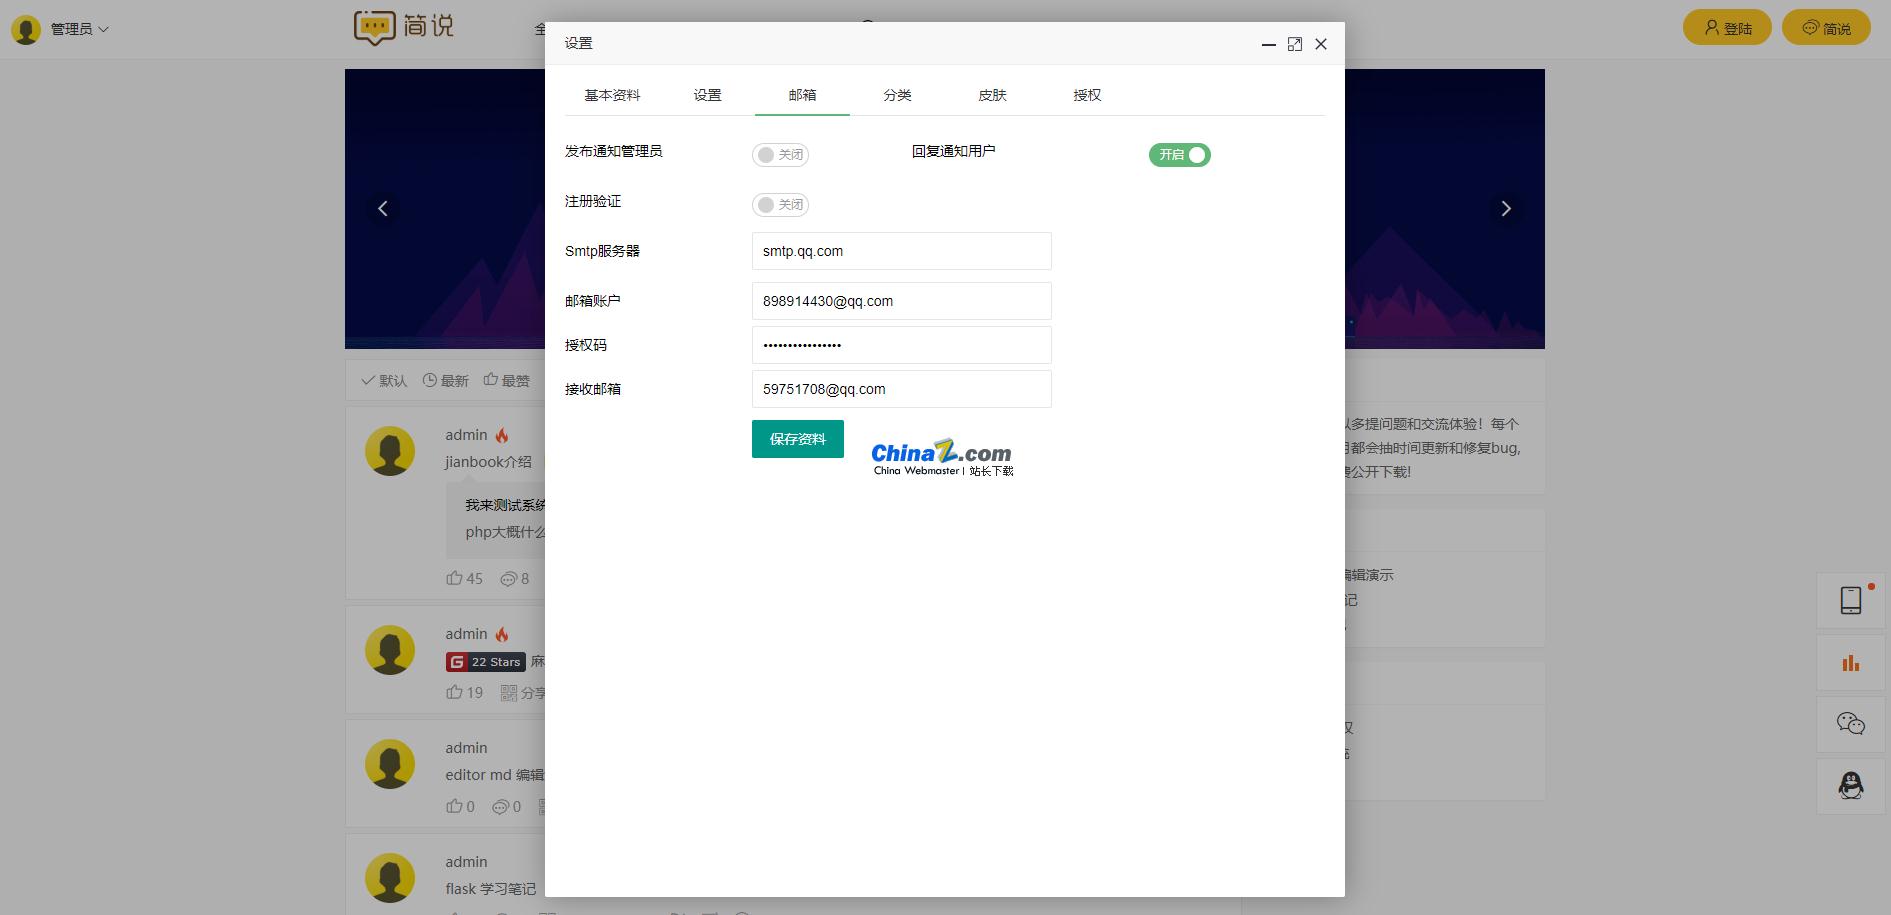 jianbook会员版超简留言社区系统v3.5